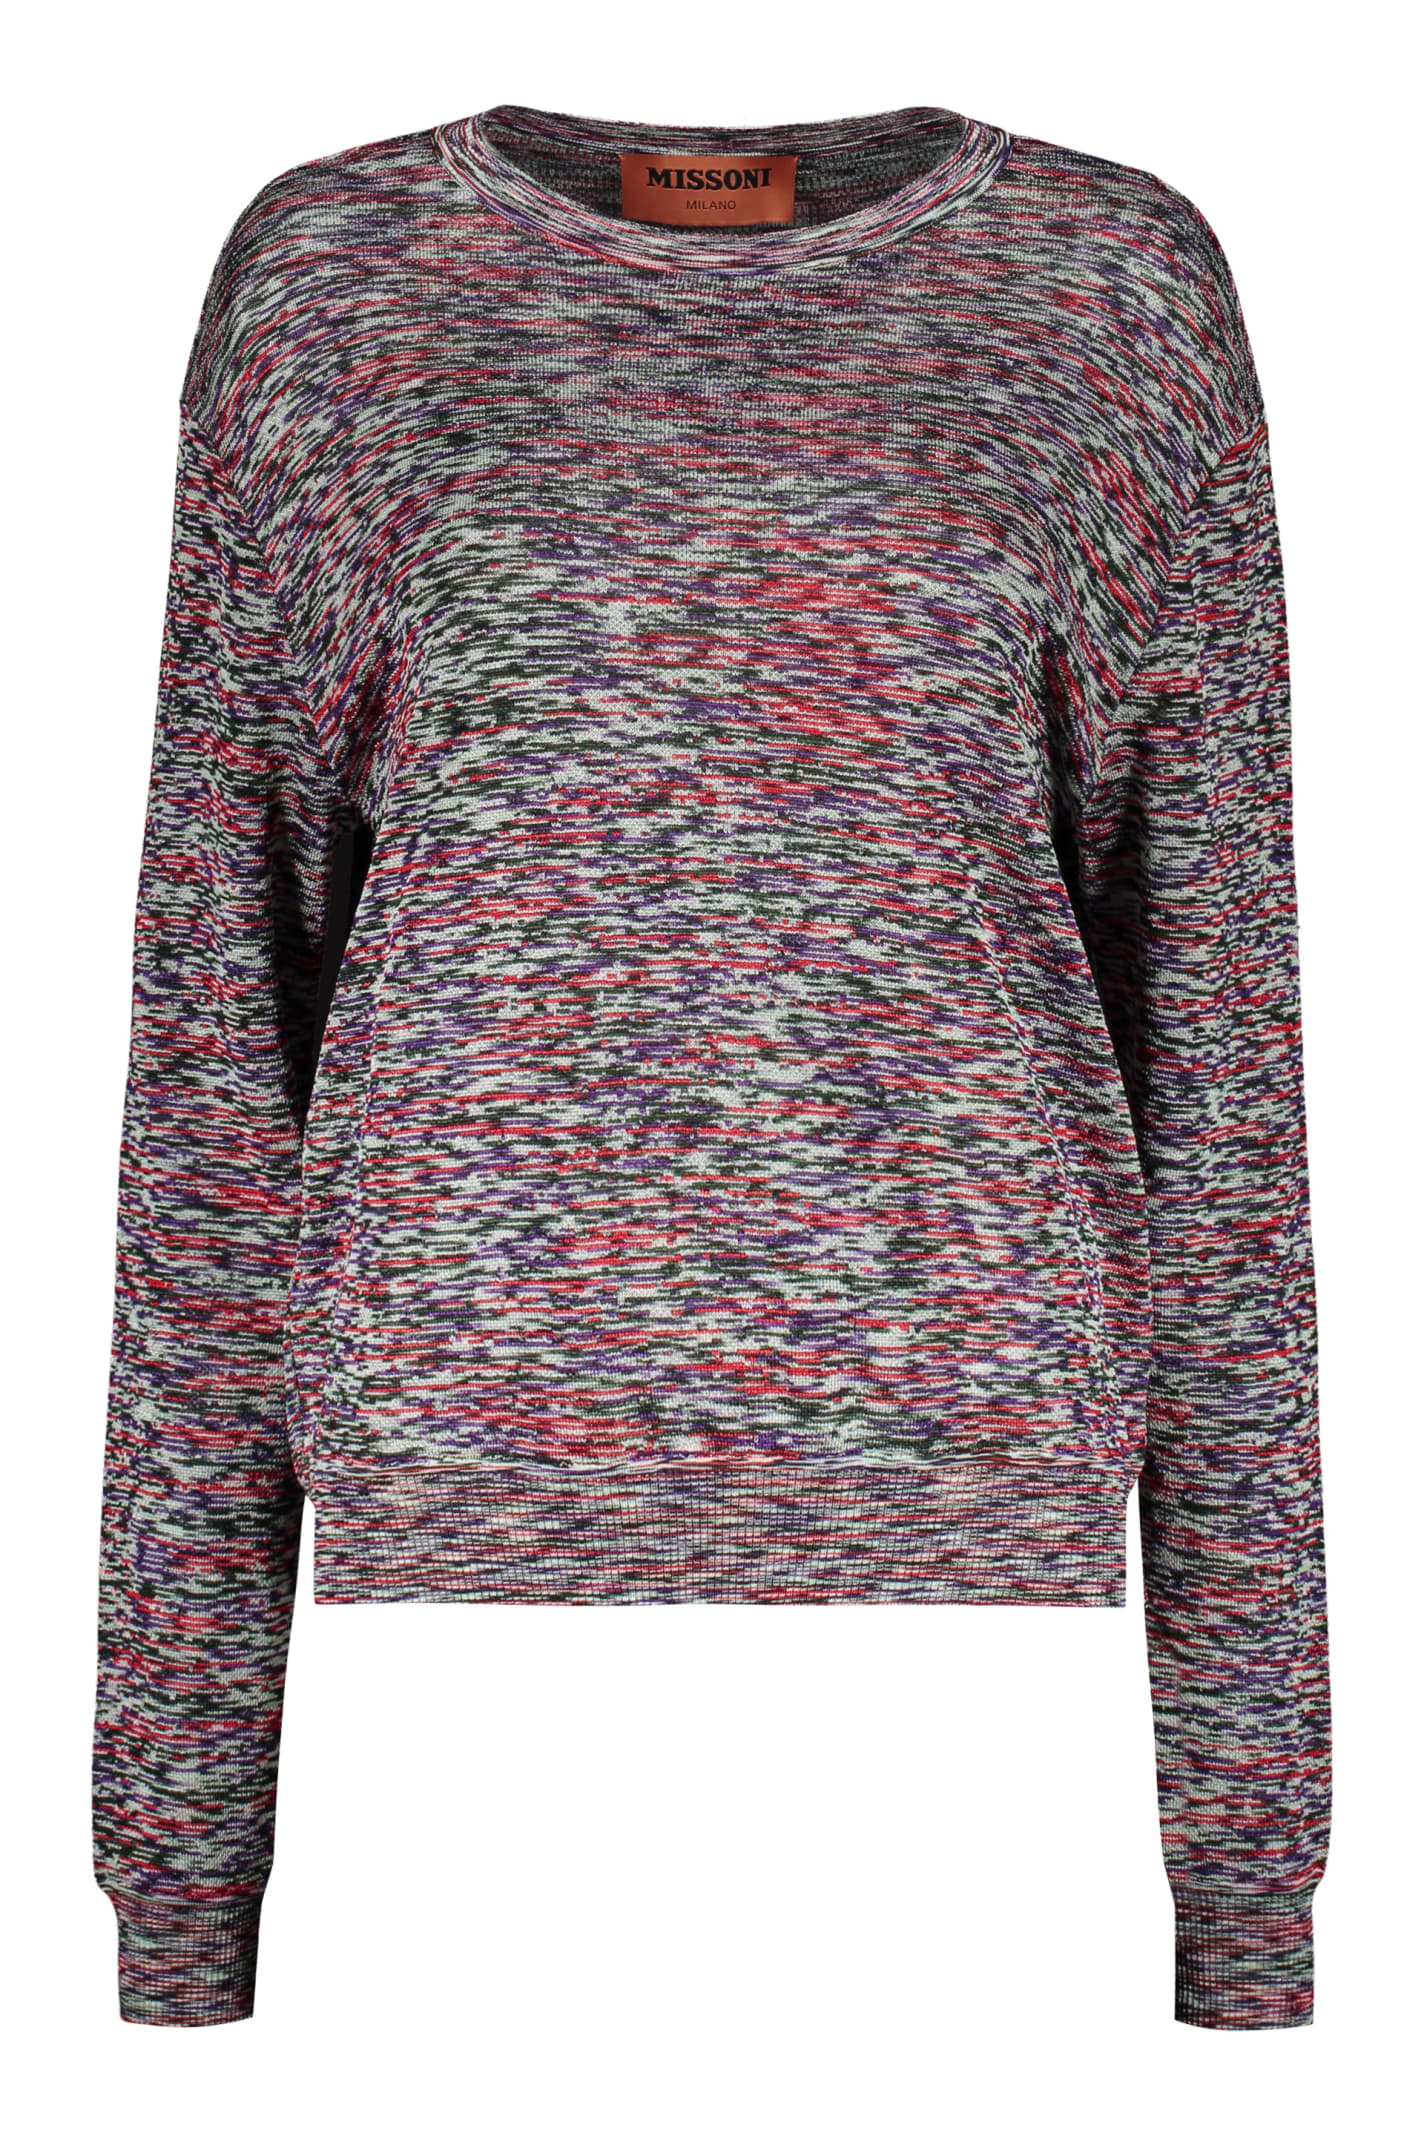 Missoni Long Sleeve Crew-neck Sweater In Multicolor